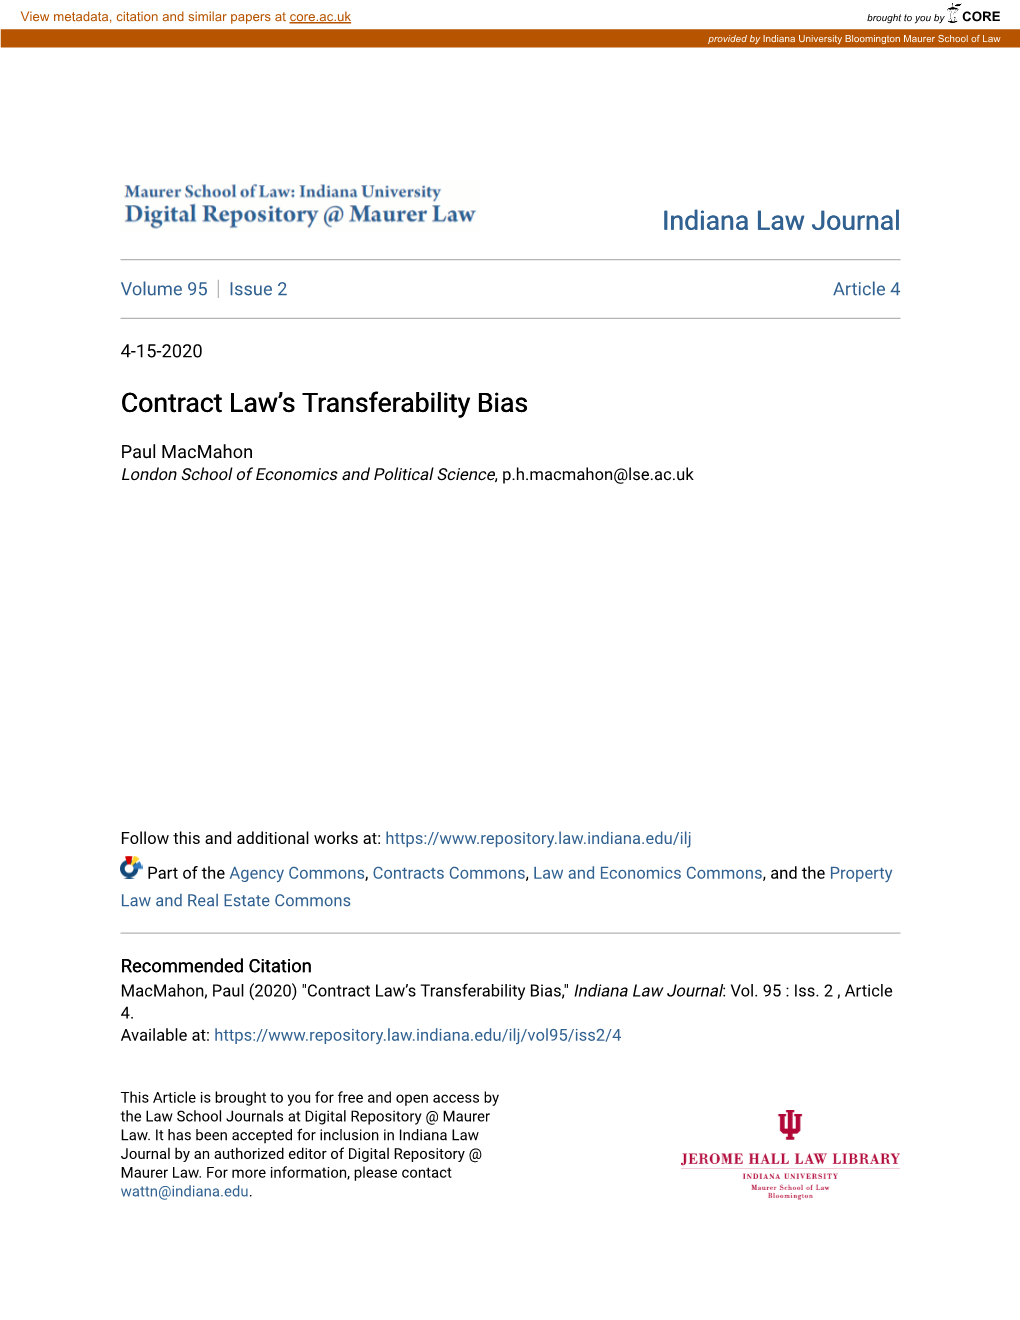 Contract Law's Transferability Bias